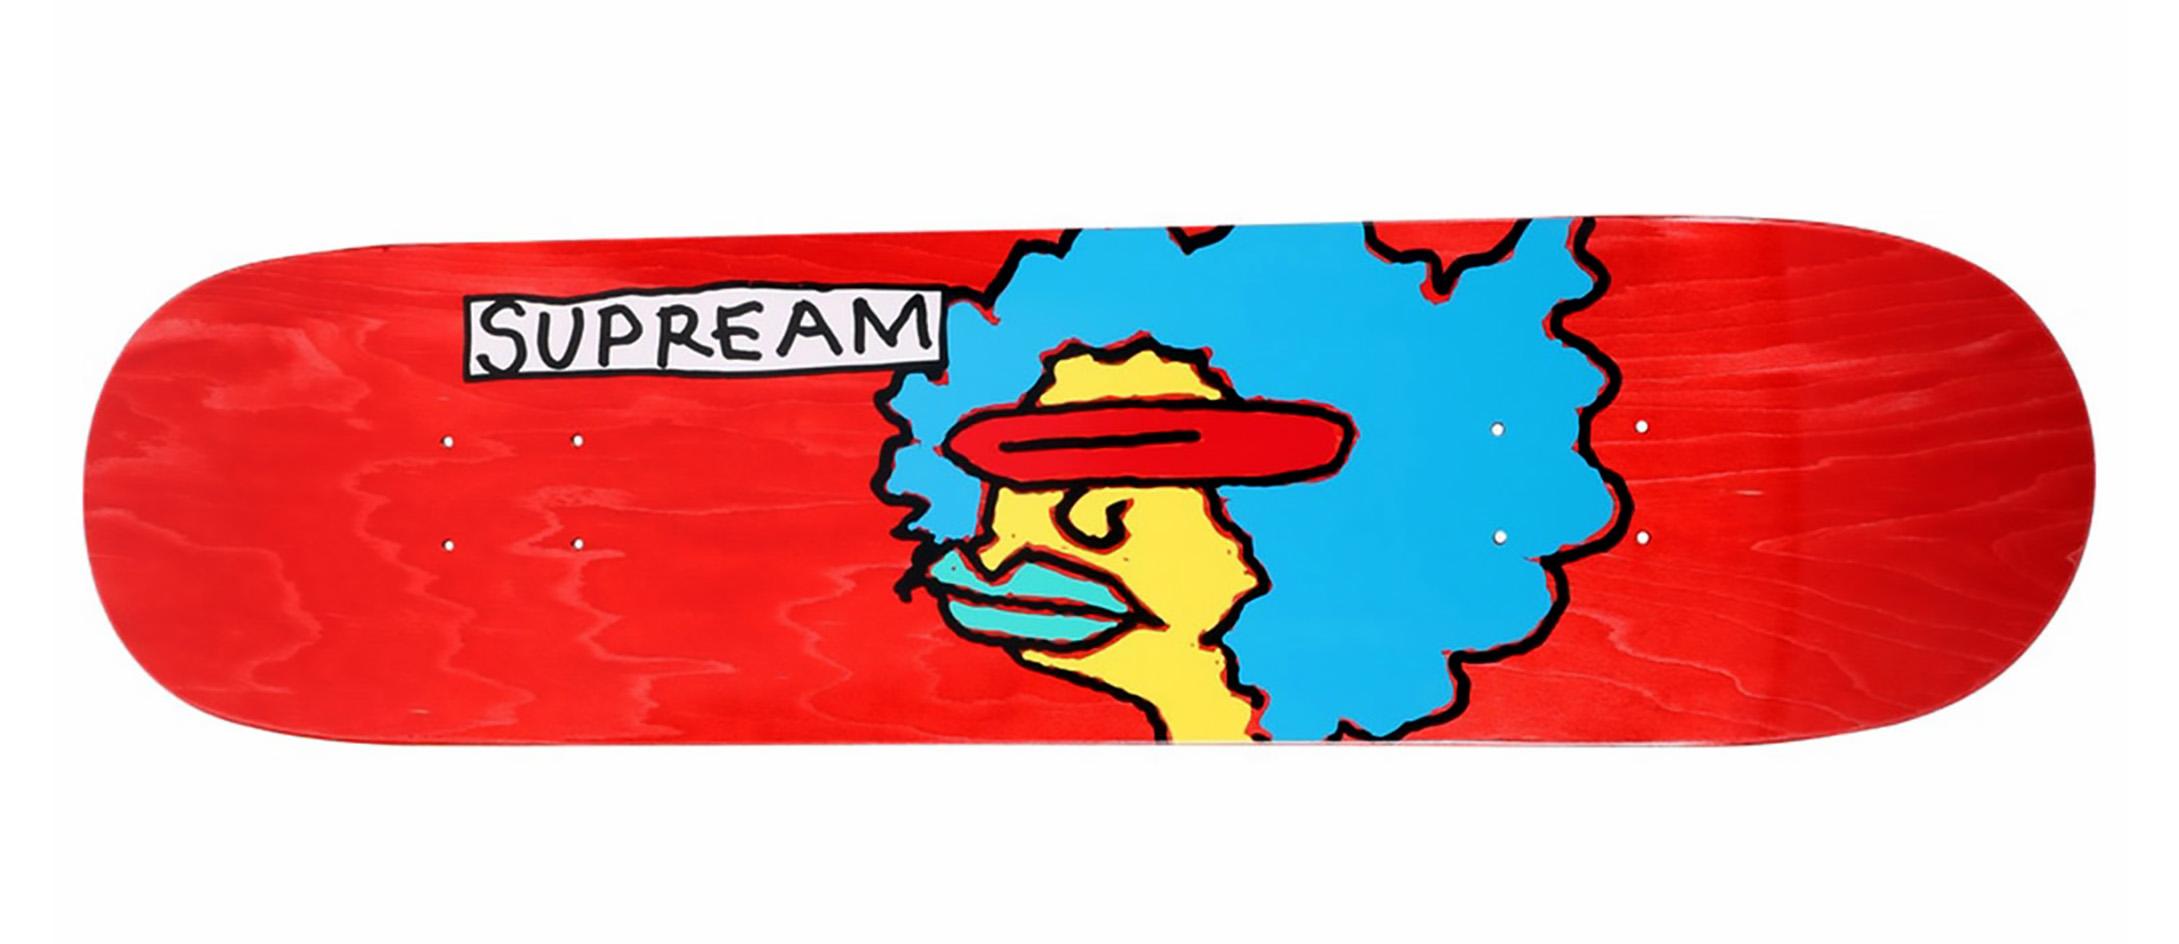 Supreme Supream sticker vinyl decal skateboard mermaid girl head Mark Gonz white 